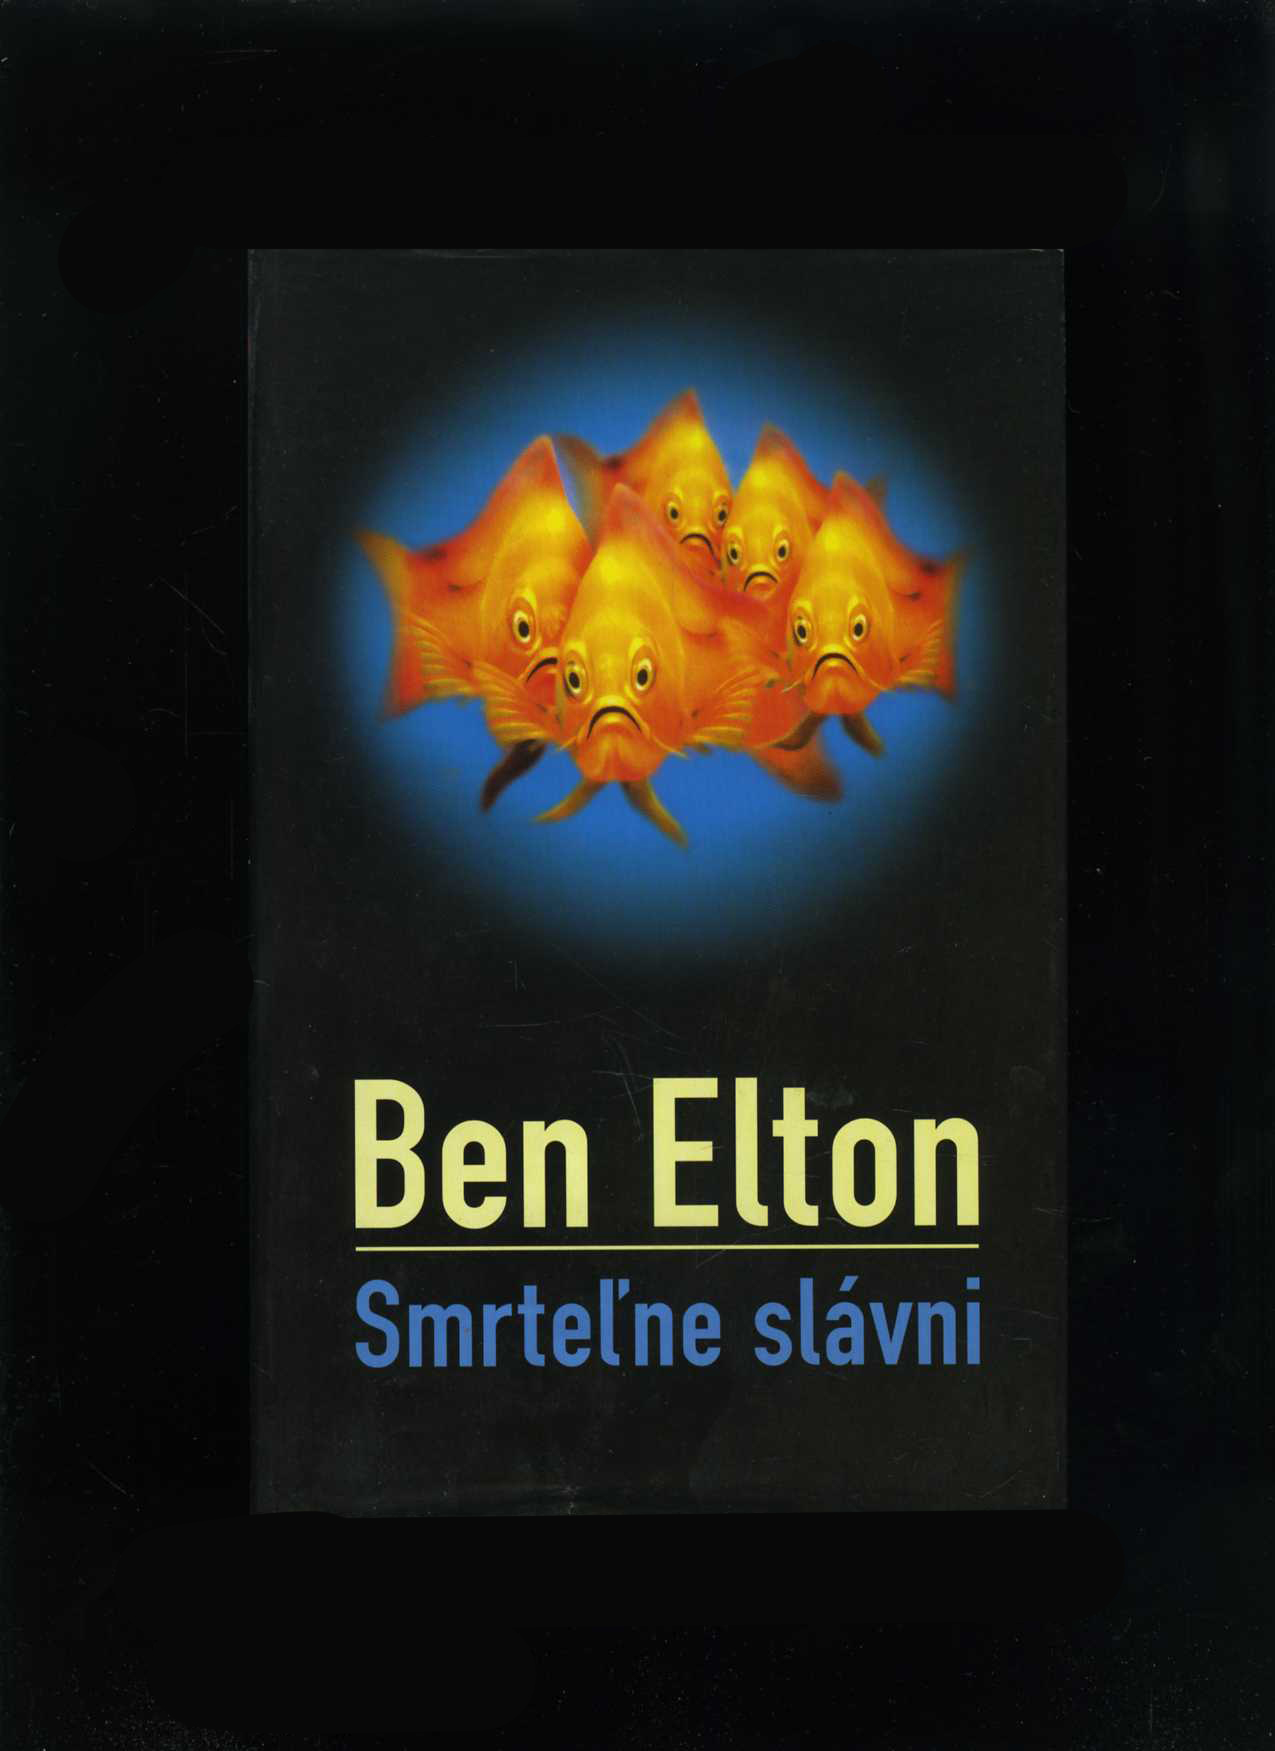 Smrteľne slávni (Ben Elton)